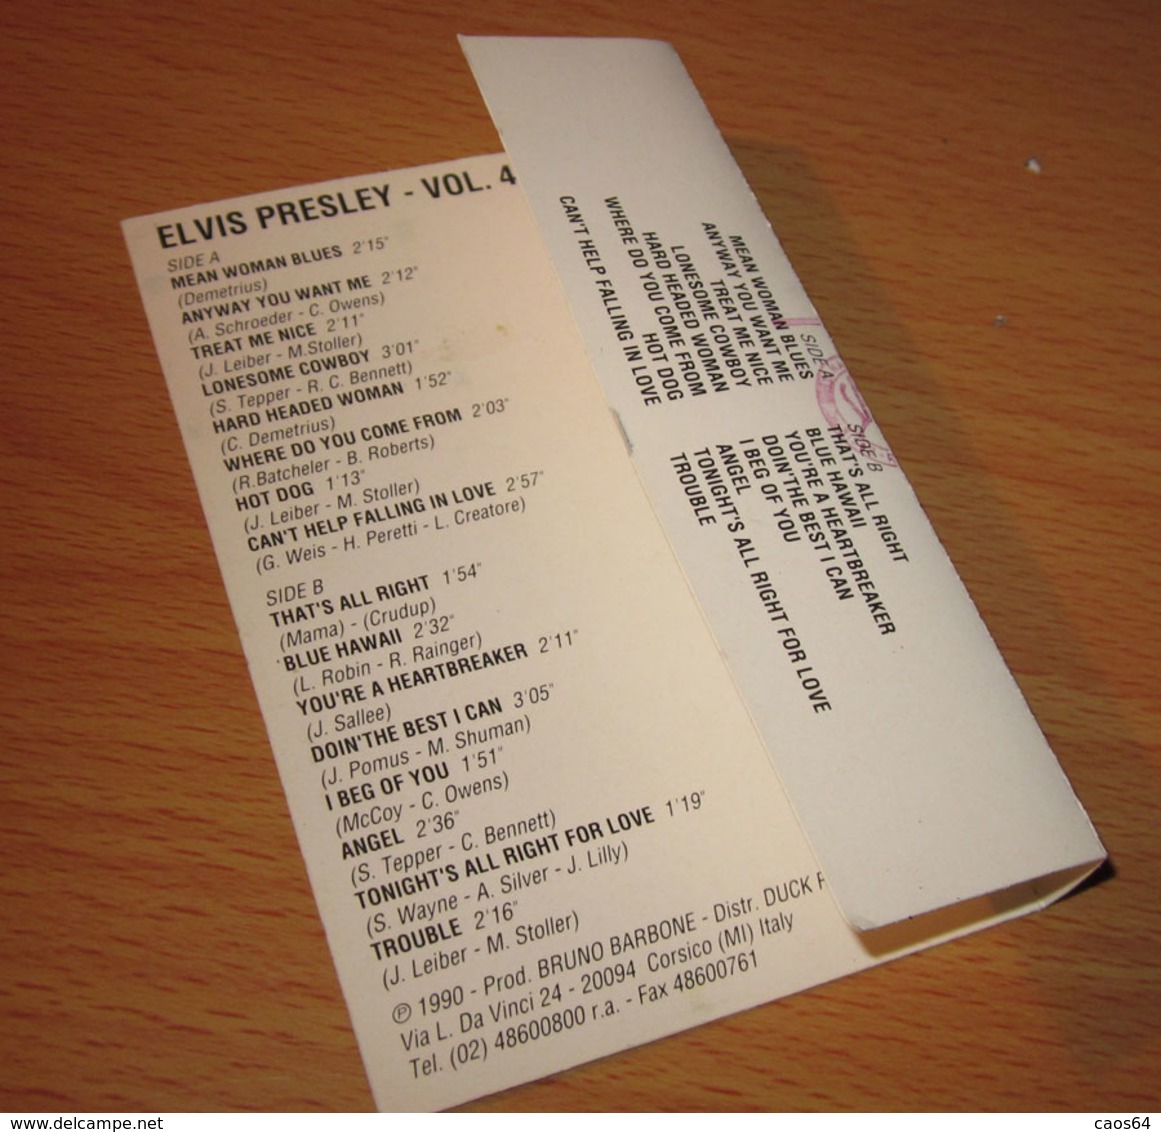 Elvis Presley Vol. 4 - Cassette